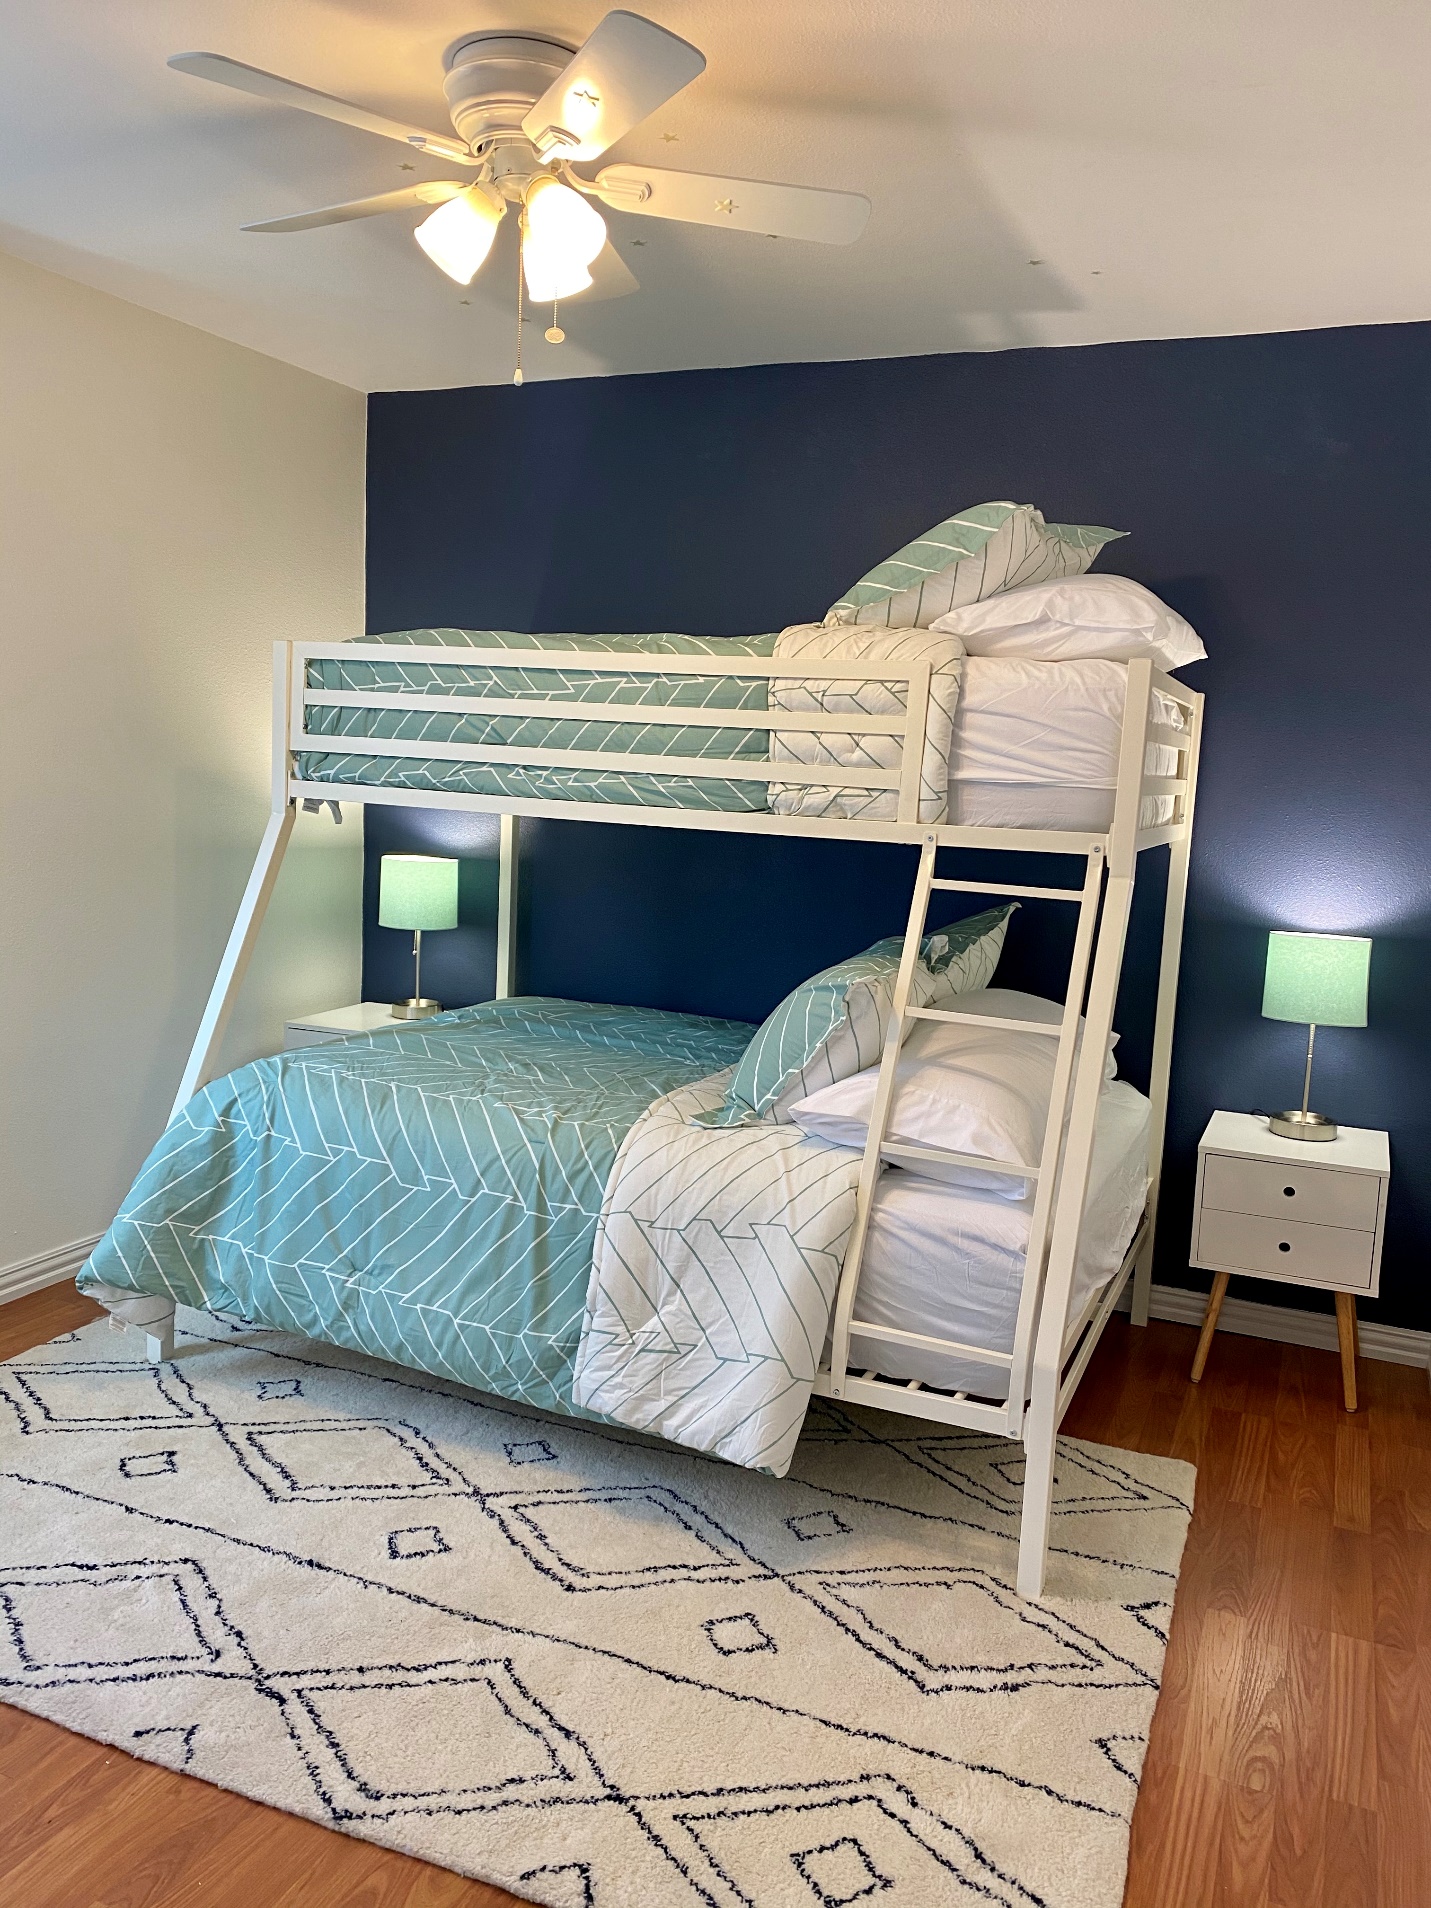 Kid's bedroom interior design - Portfolio by San Antonio Interior designer Revive Design